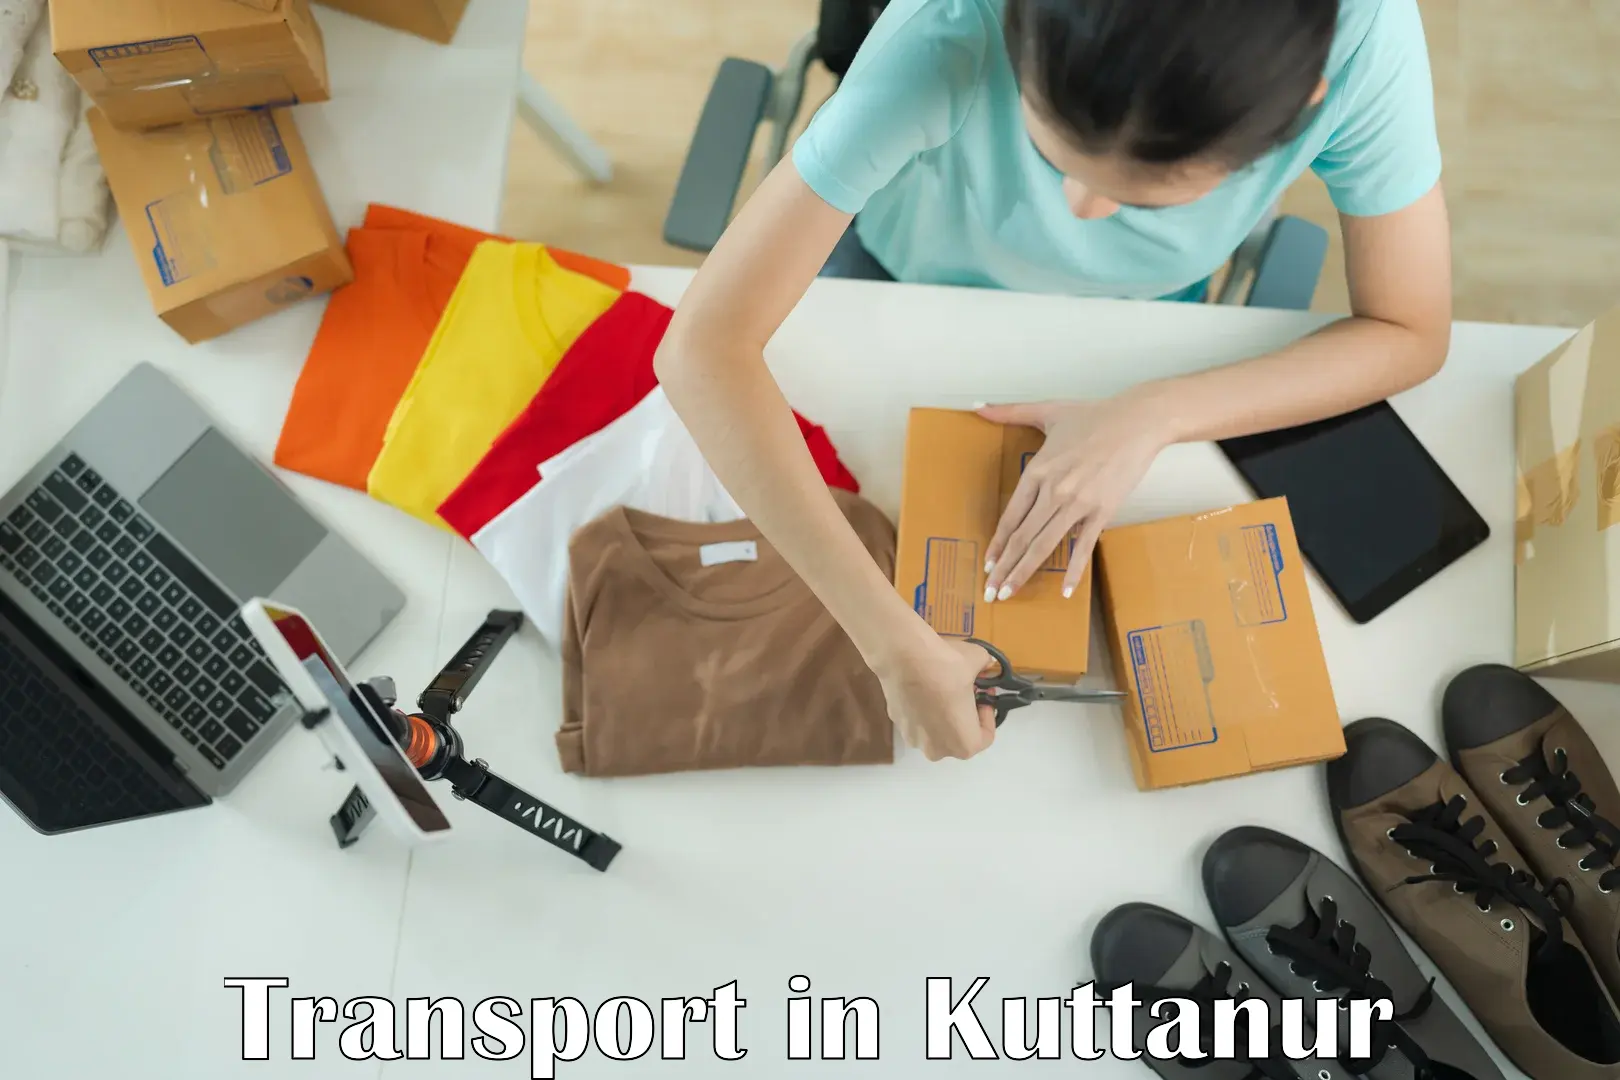 Intercity transport in Kuttanur